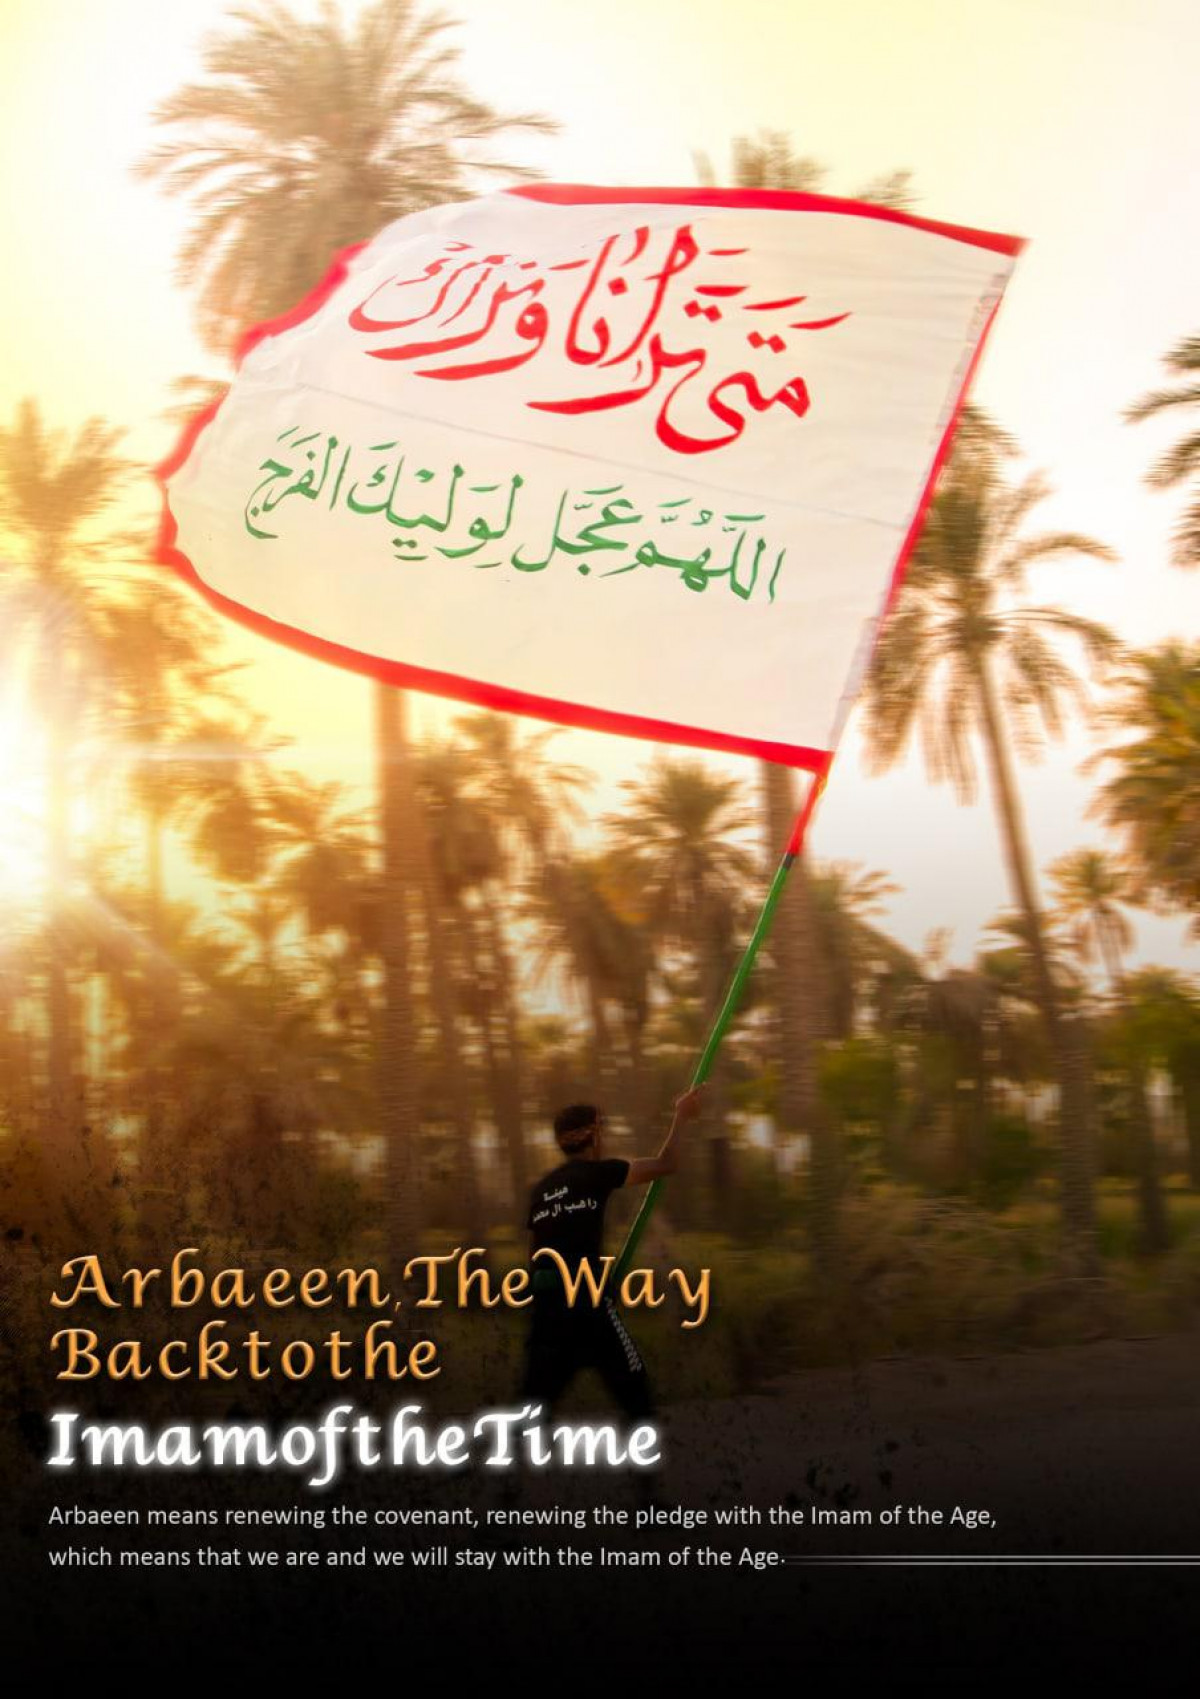 Arbaeen The Way Backtothe Imamofthe Time 2